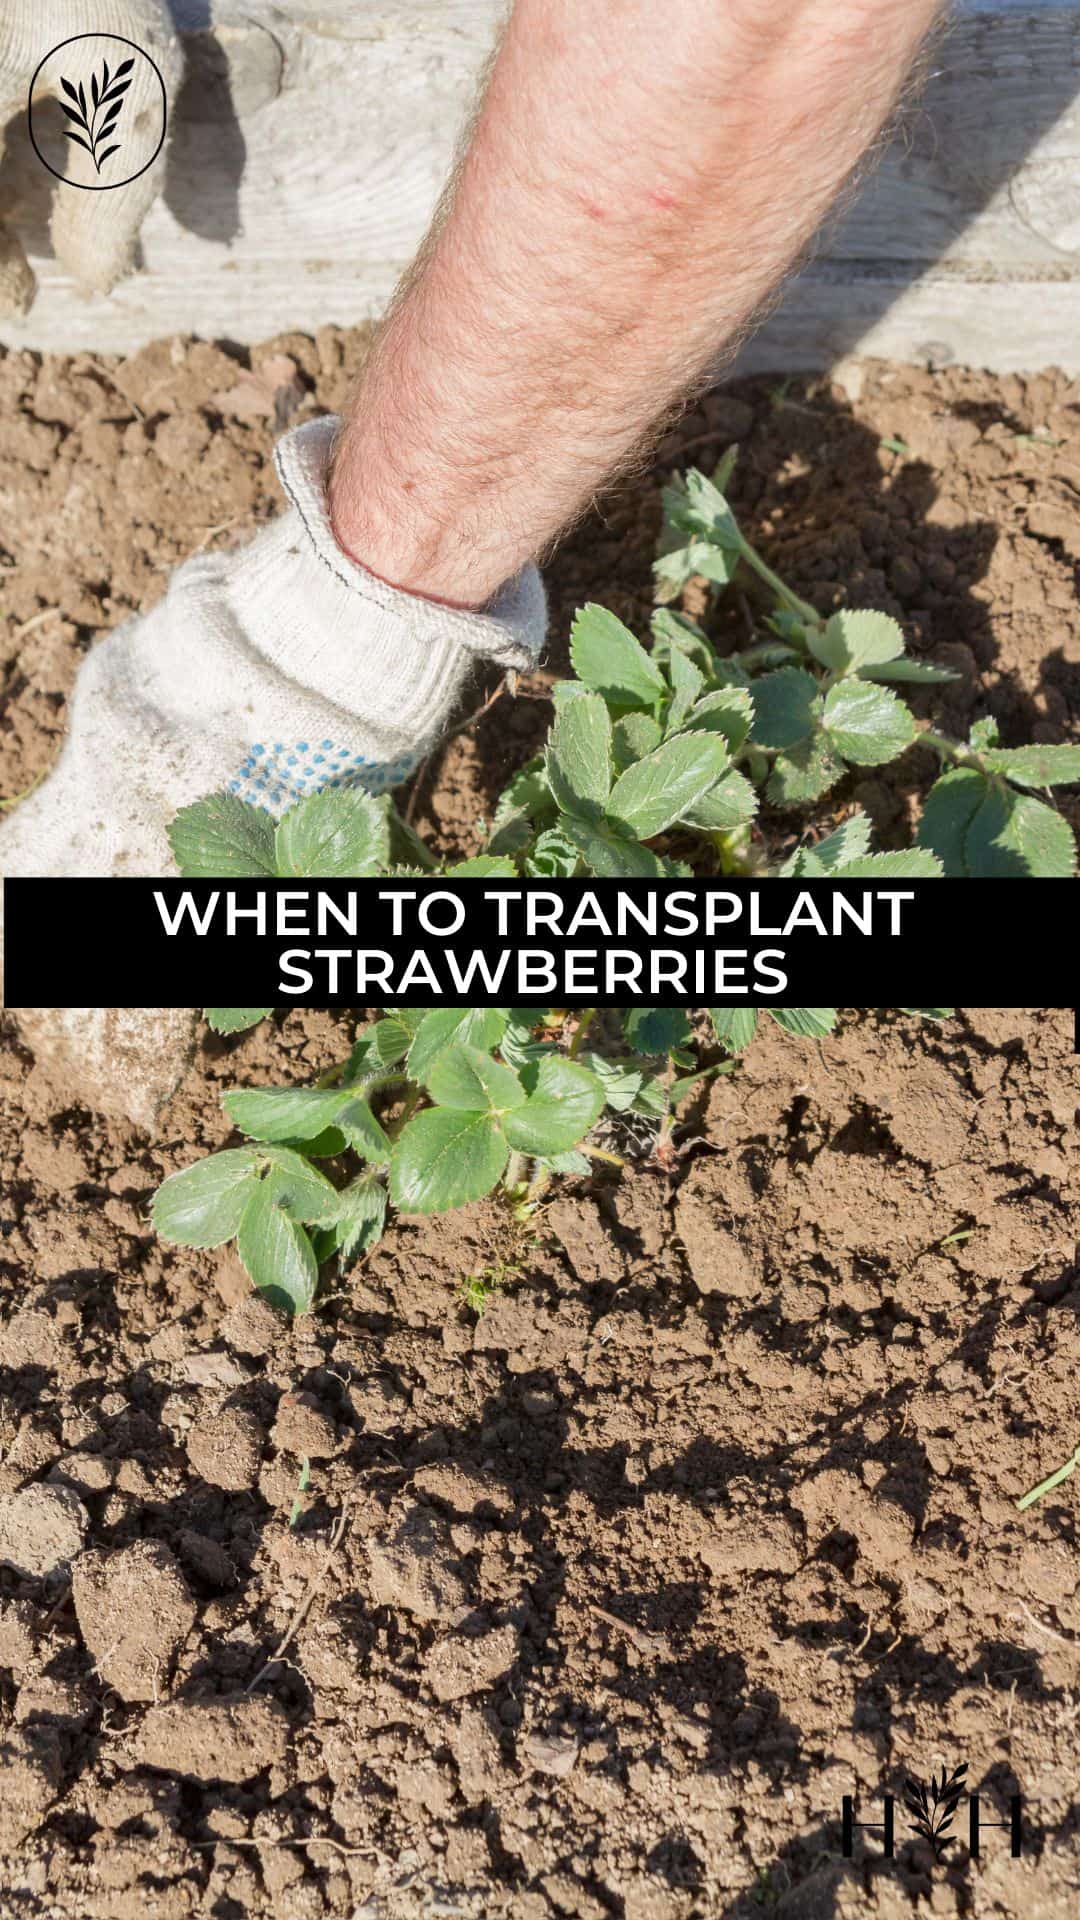 When to transplant strawberries via @home4theharvest